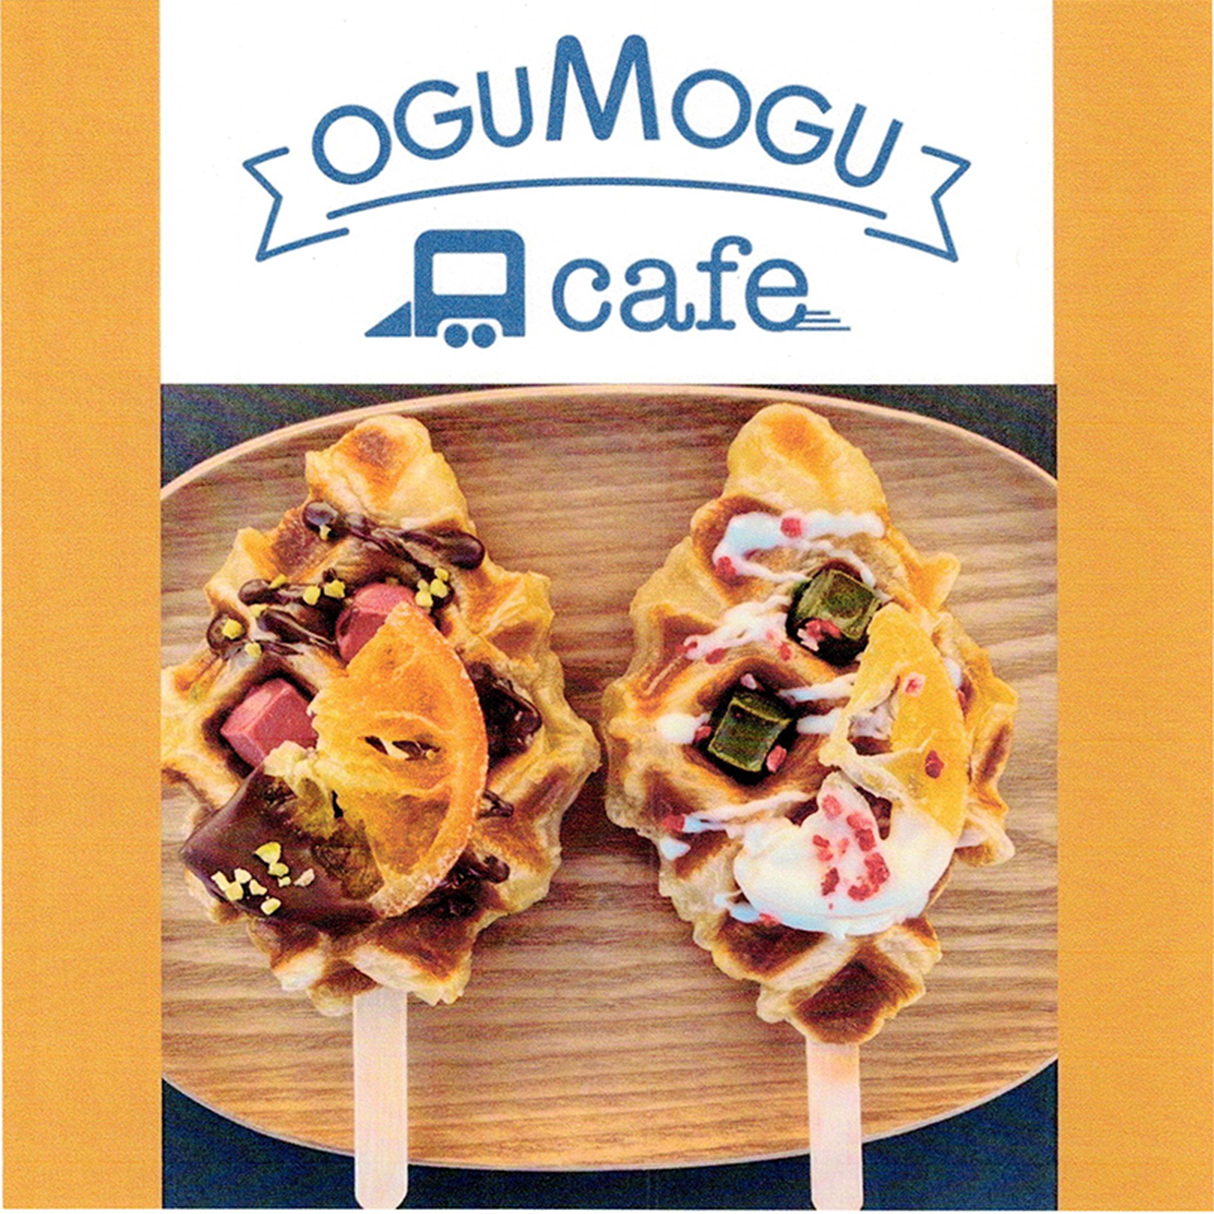 OGUMOGU_cafe